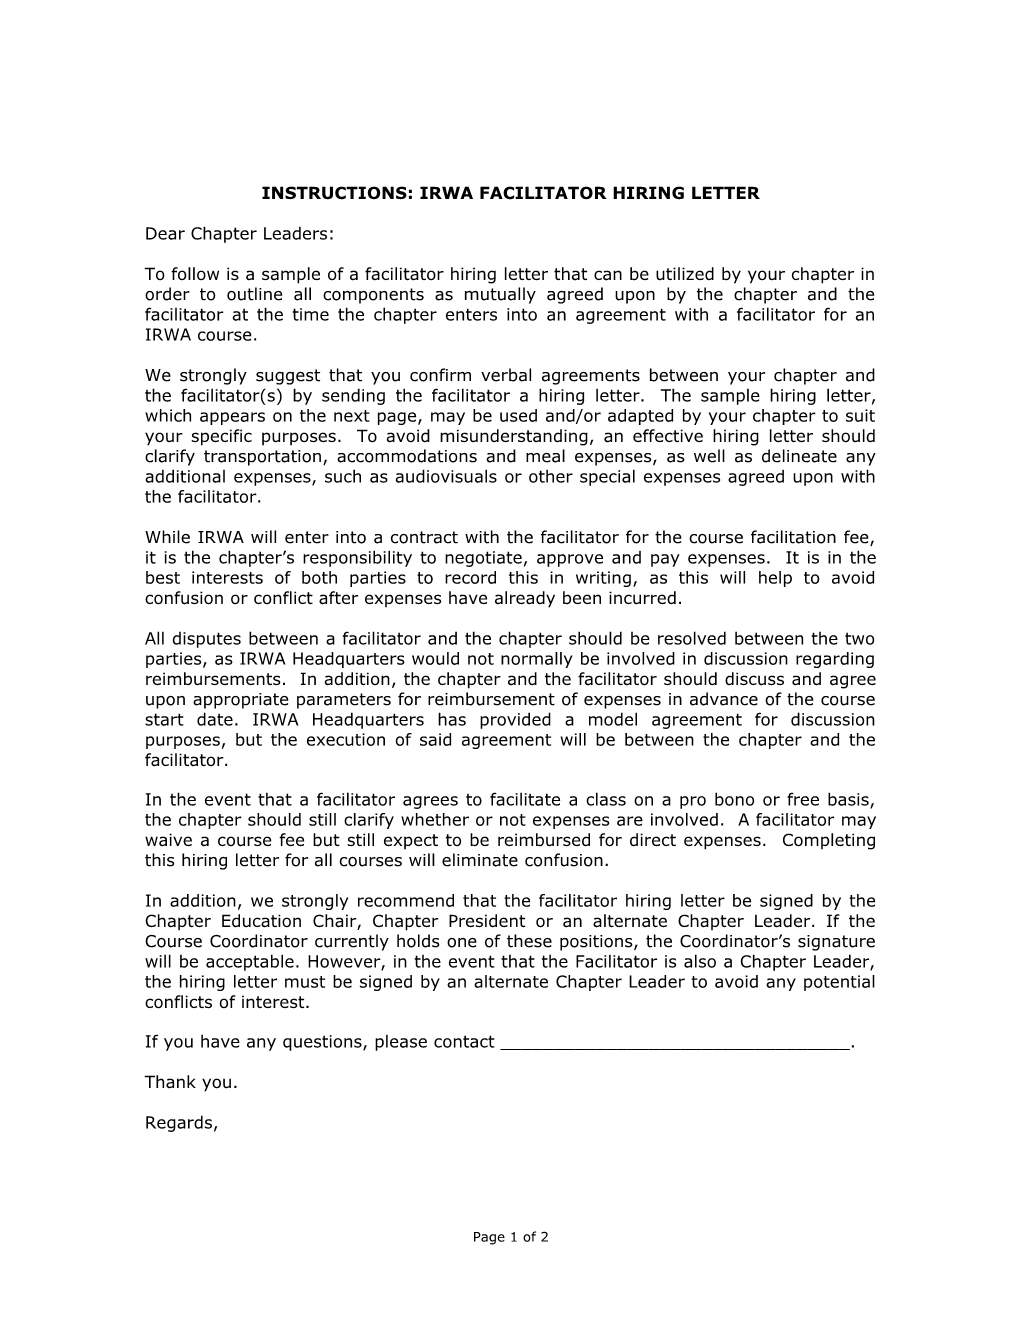 Instructions: Irwa Facilitator Hiring Letter